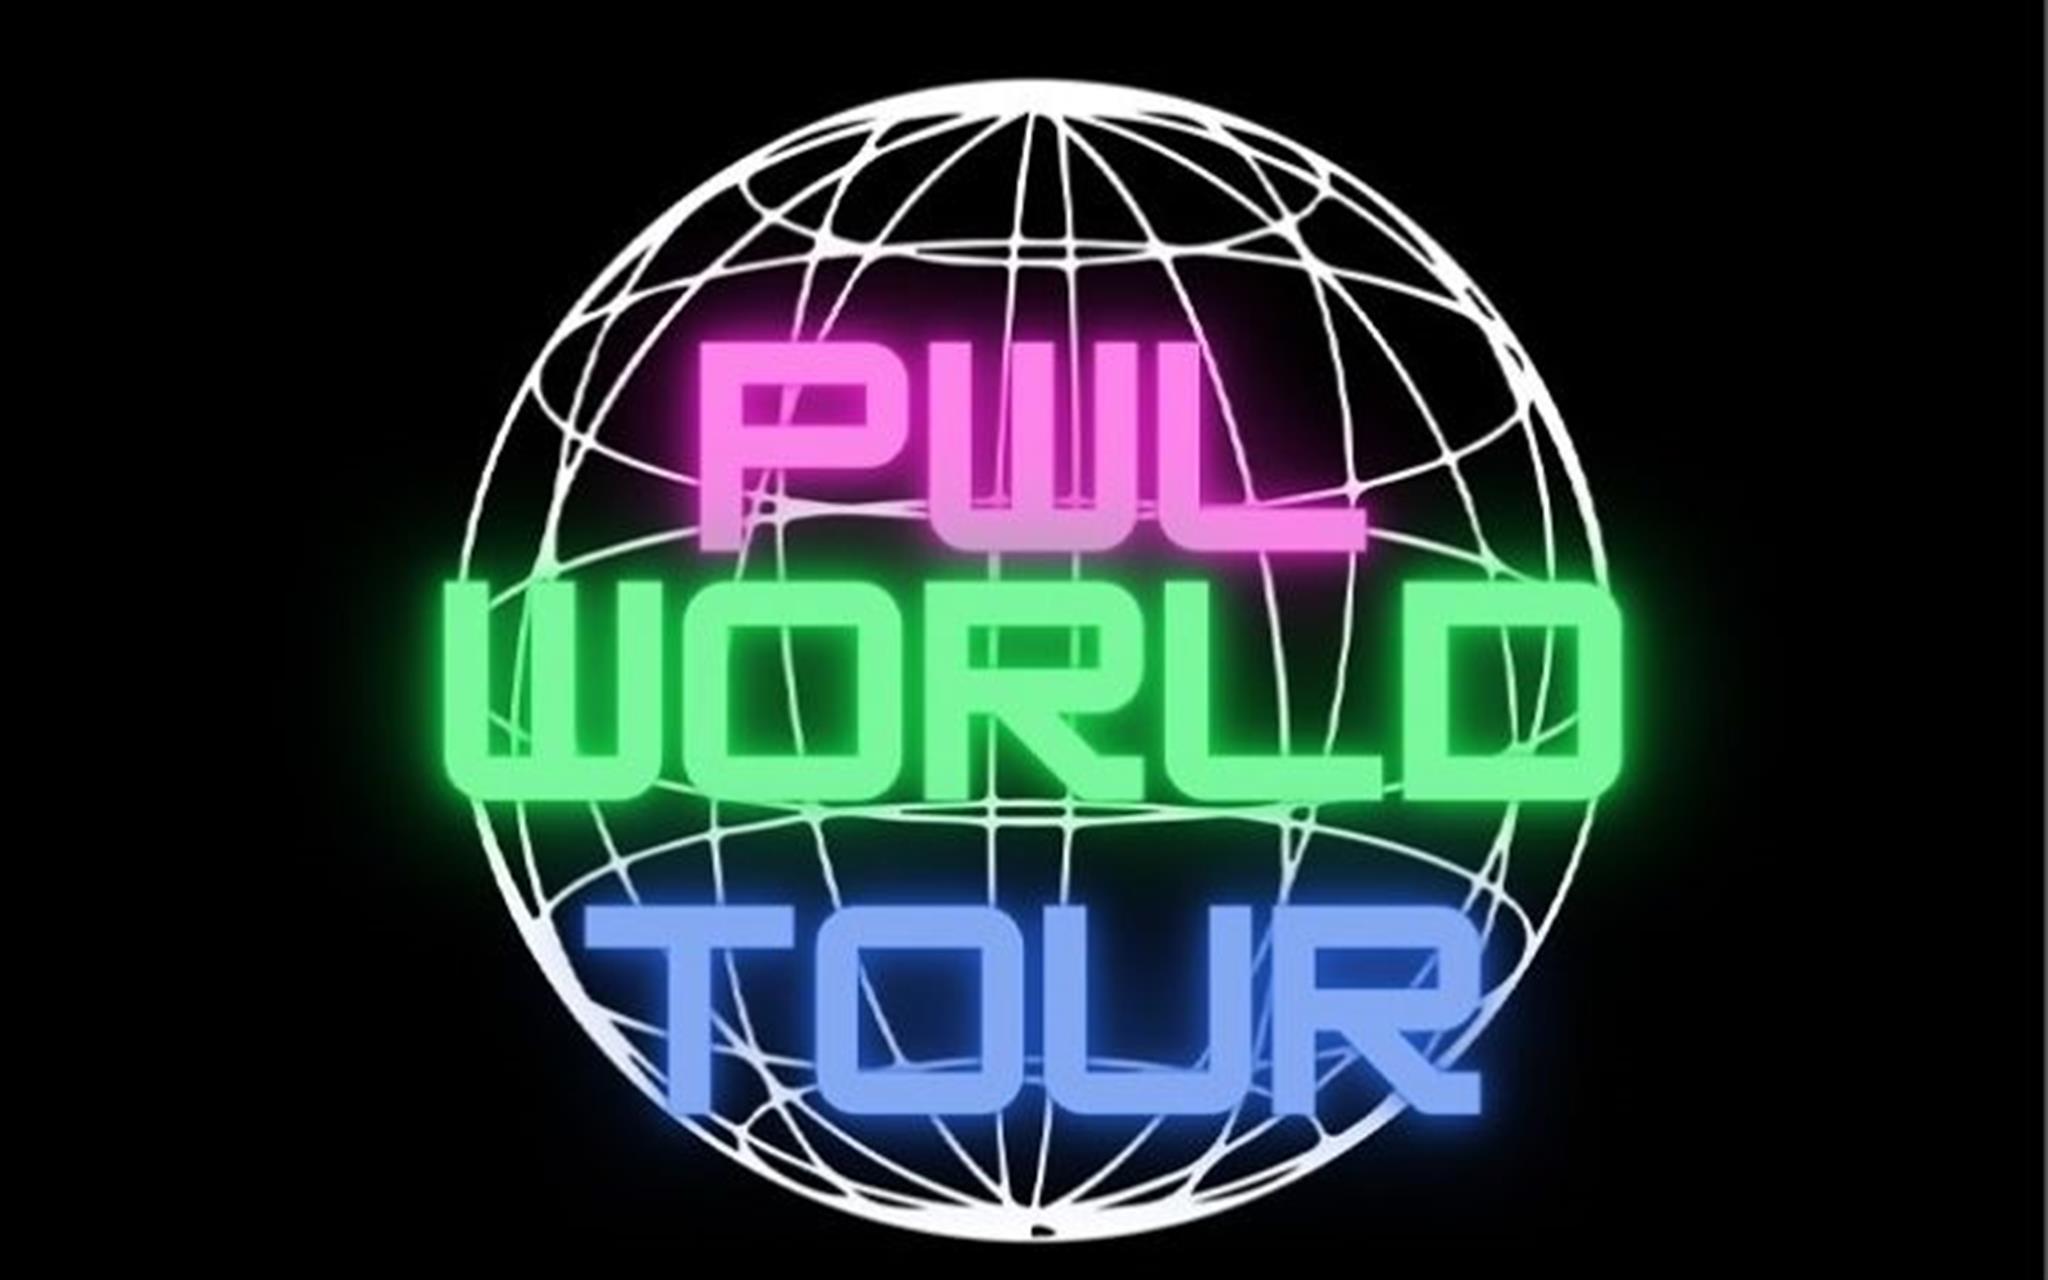 PWL World Tour image